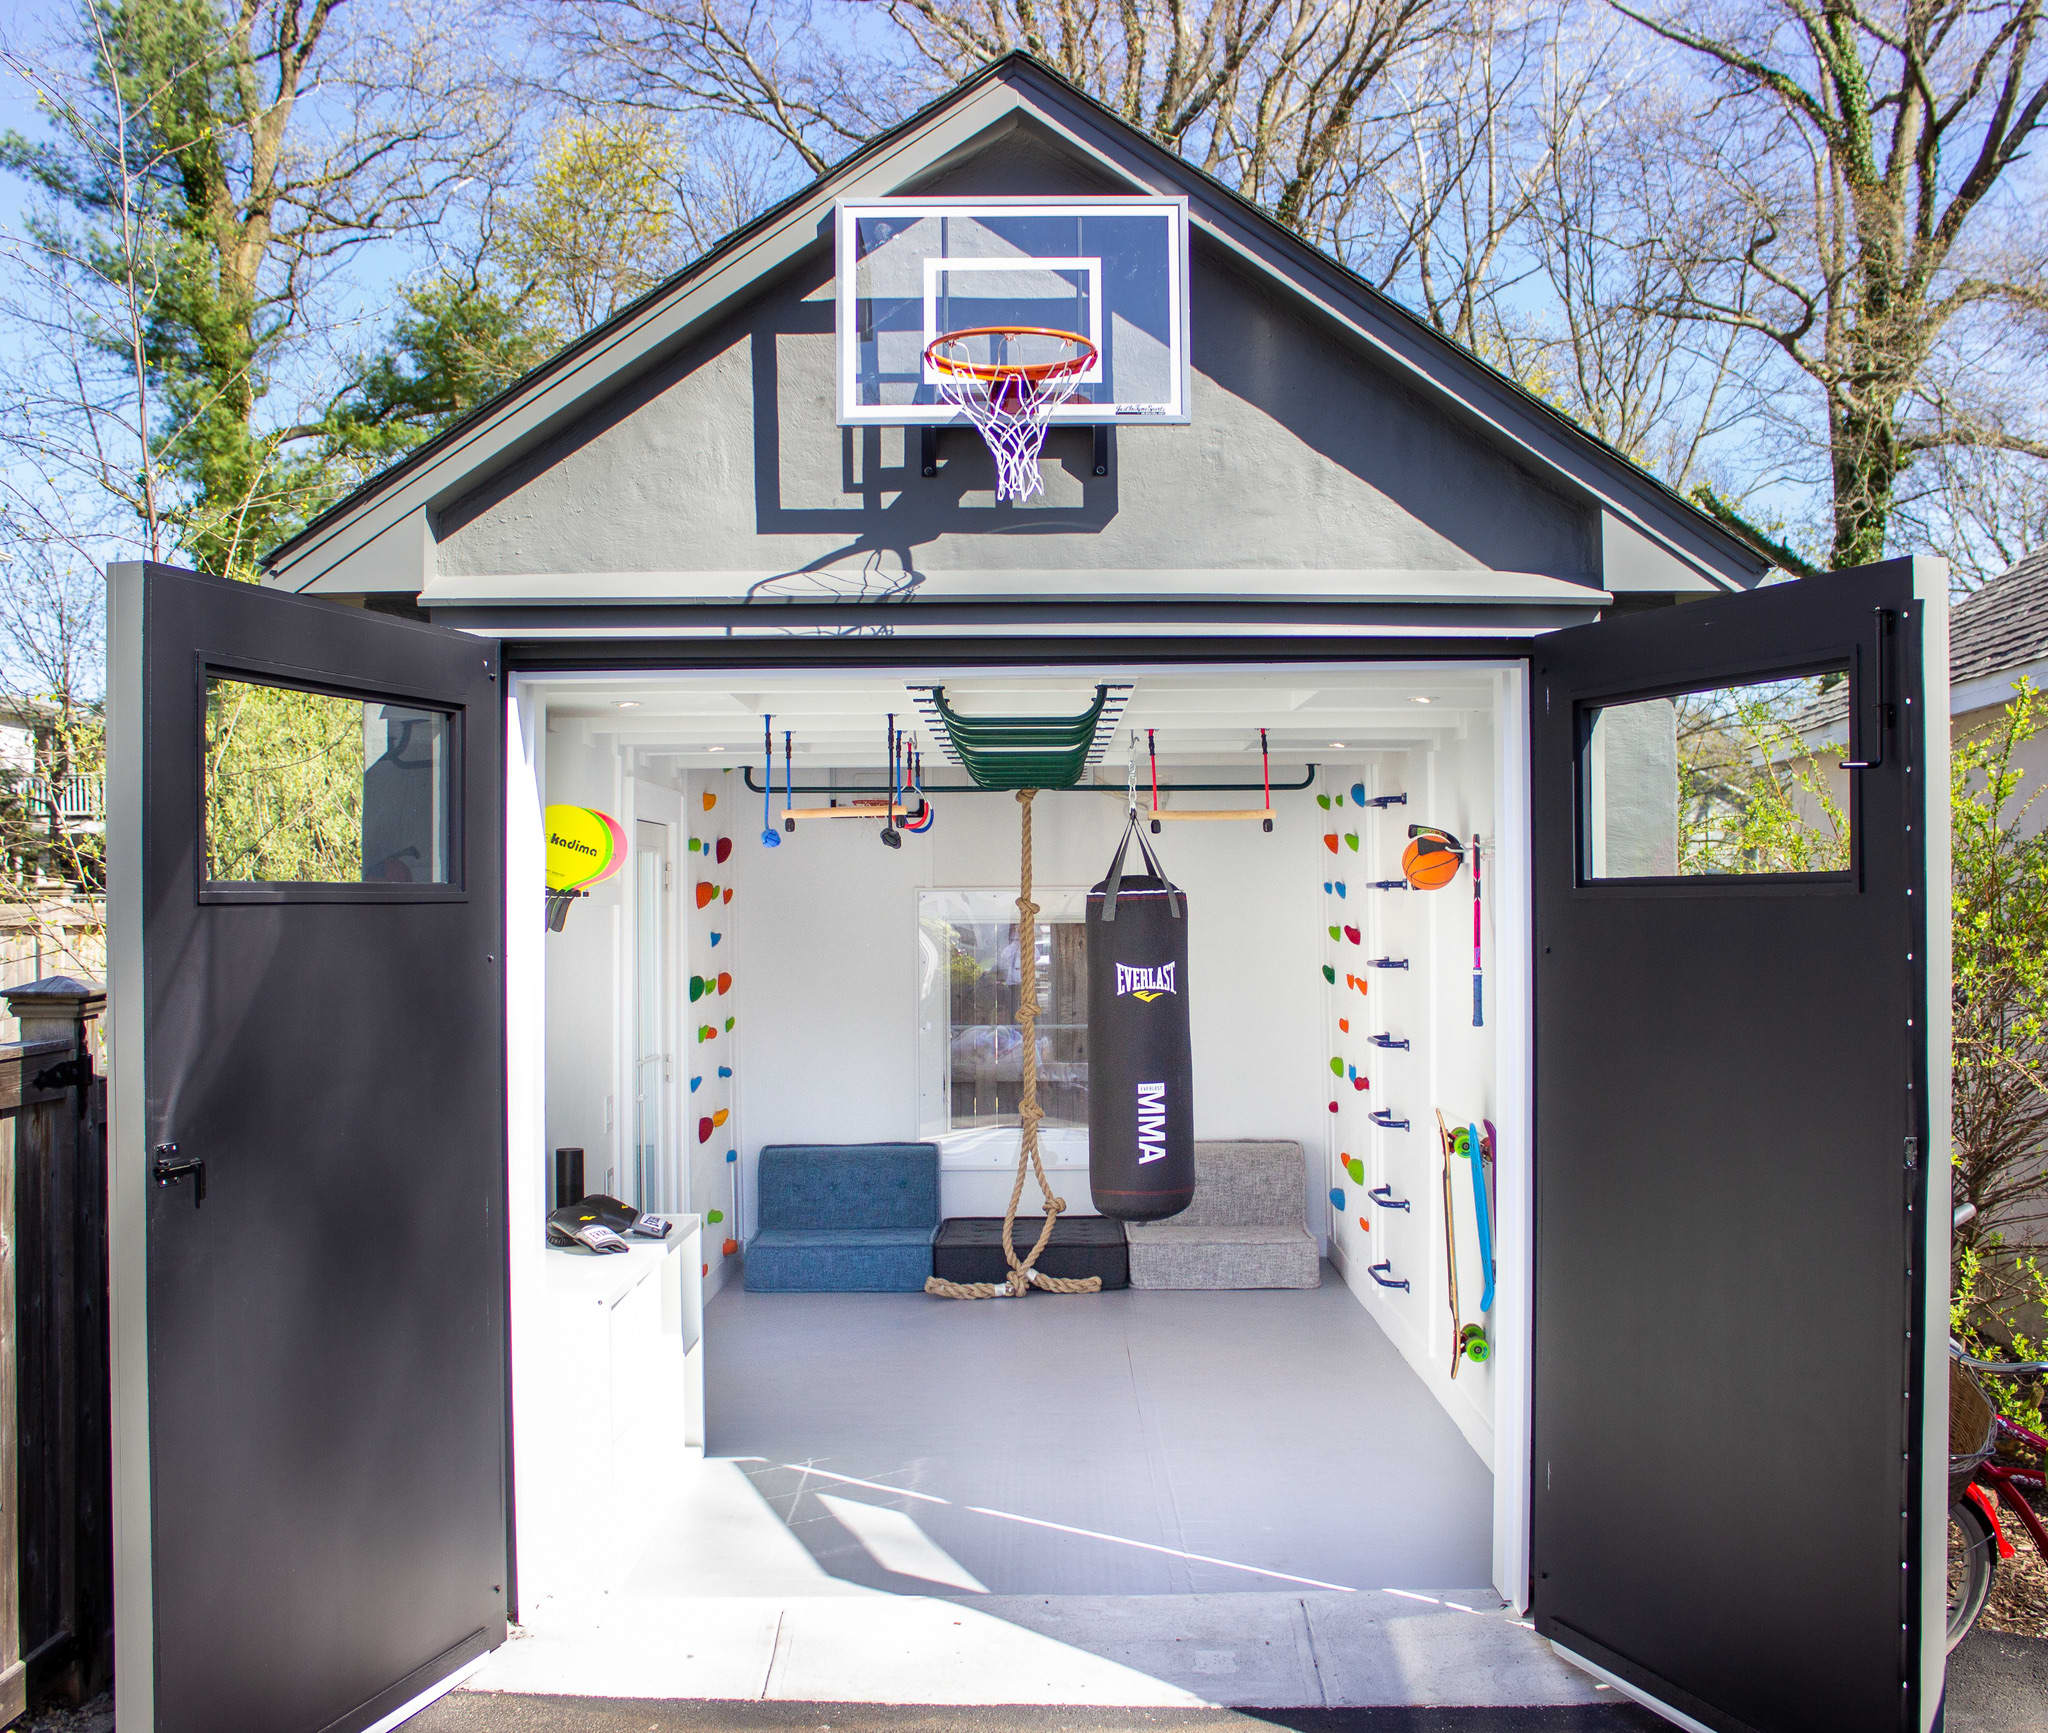 https://cdn.apartmenttherapy.info/image/upload/v1679341907/cb/Edit/garage-into-smart-playroom-space/smart-playrooms-full-exterior.jpg